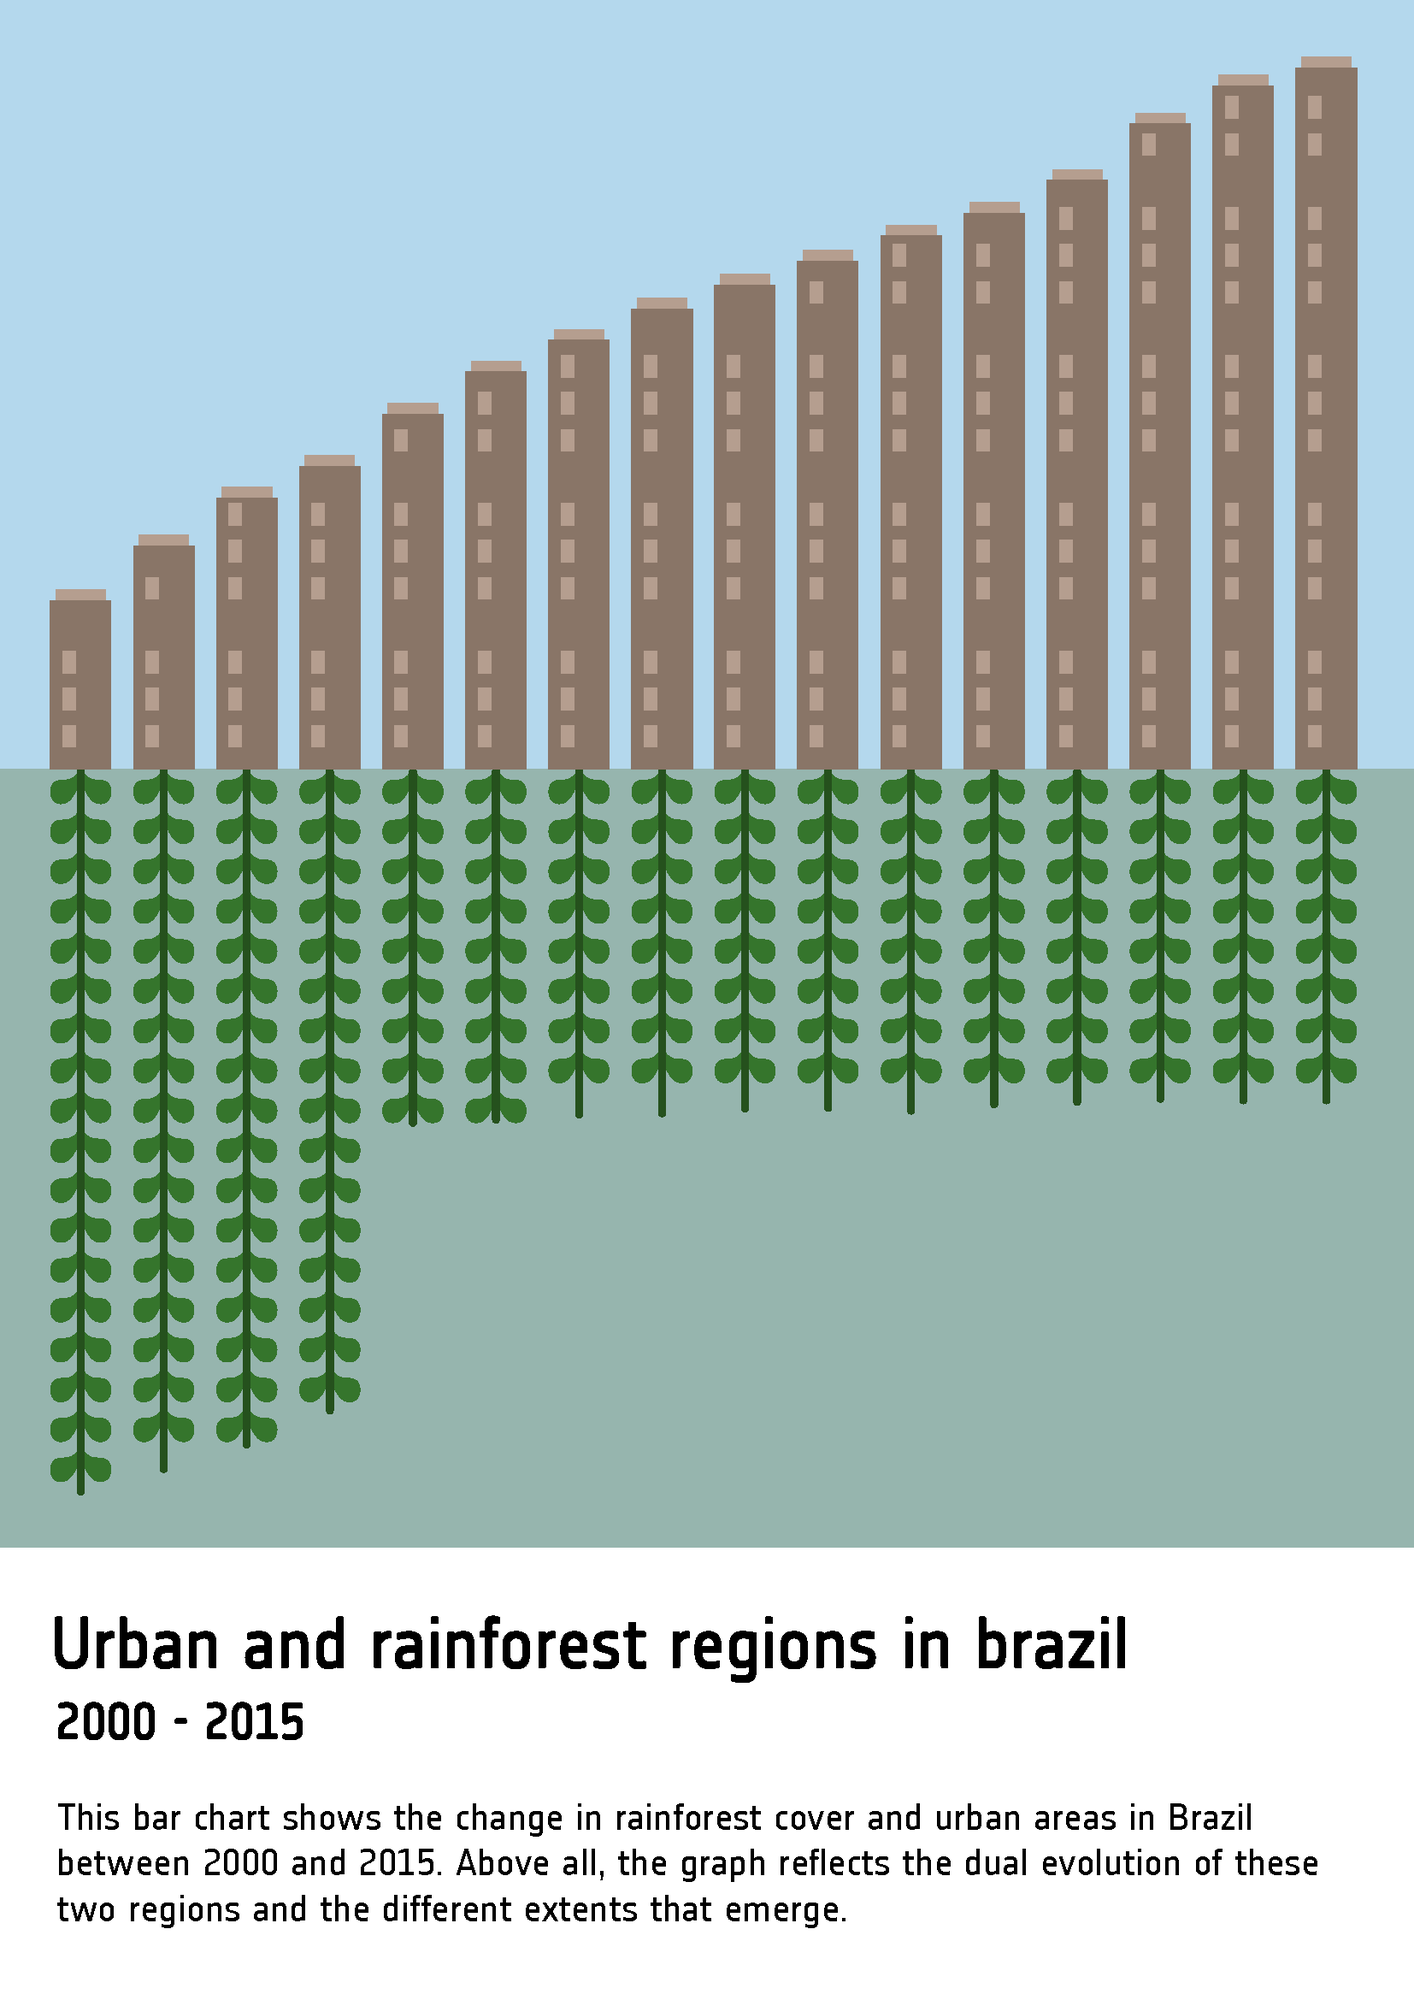 Urban and rainforest regions in Brazil